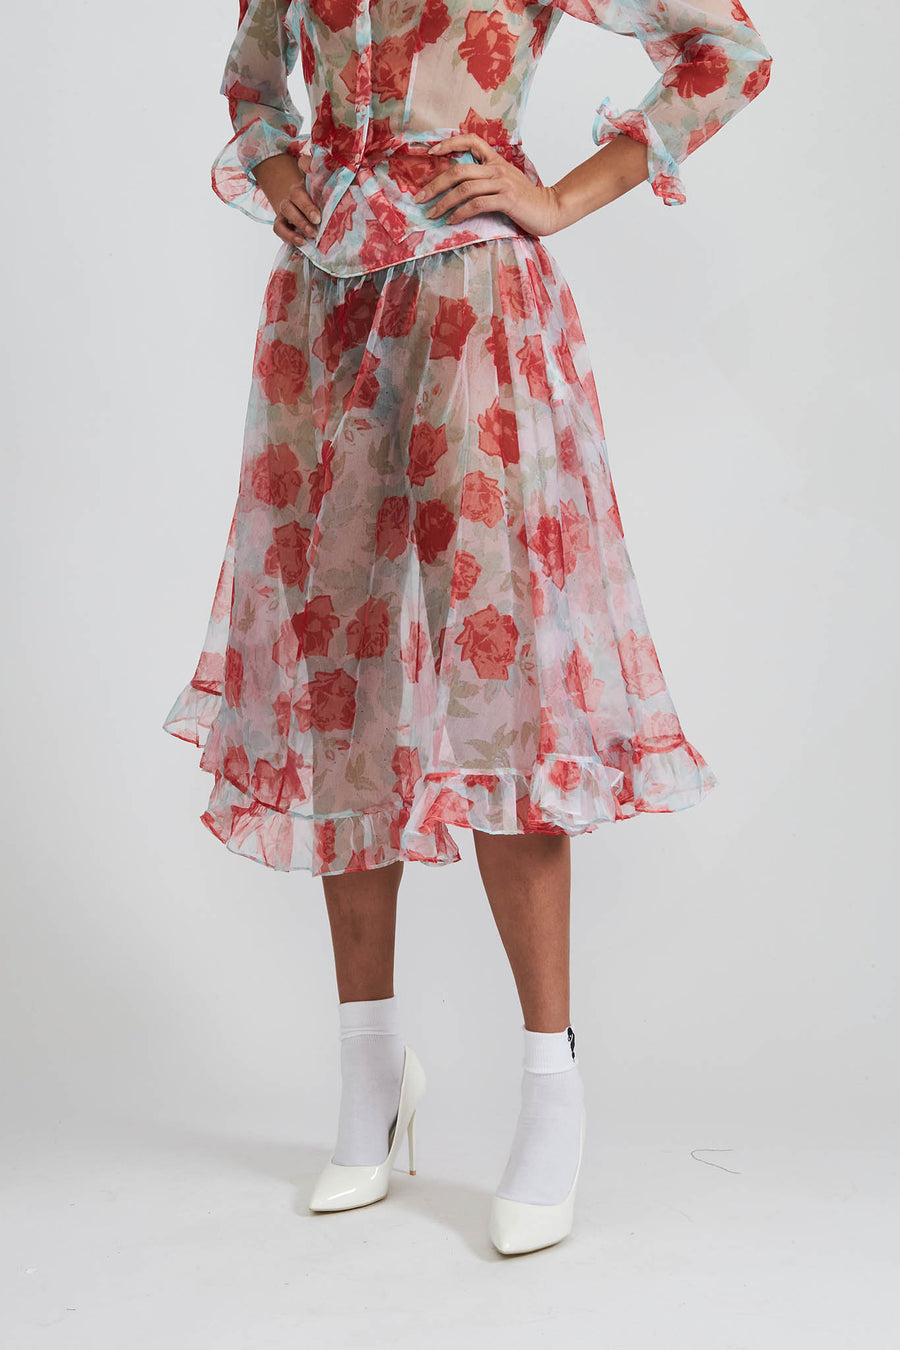 BATSHEVA - Ruffle Skirt in Painted Rose Organza